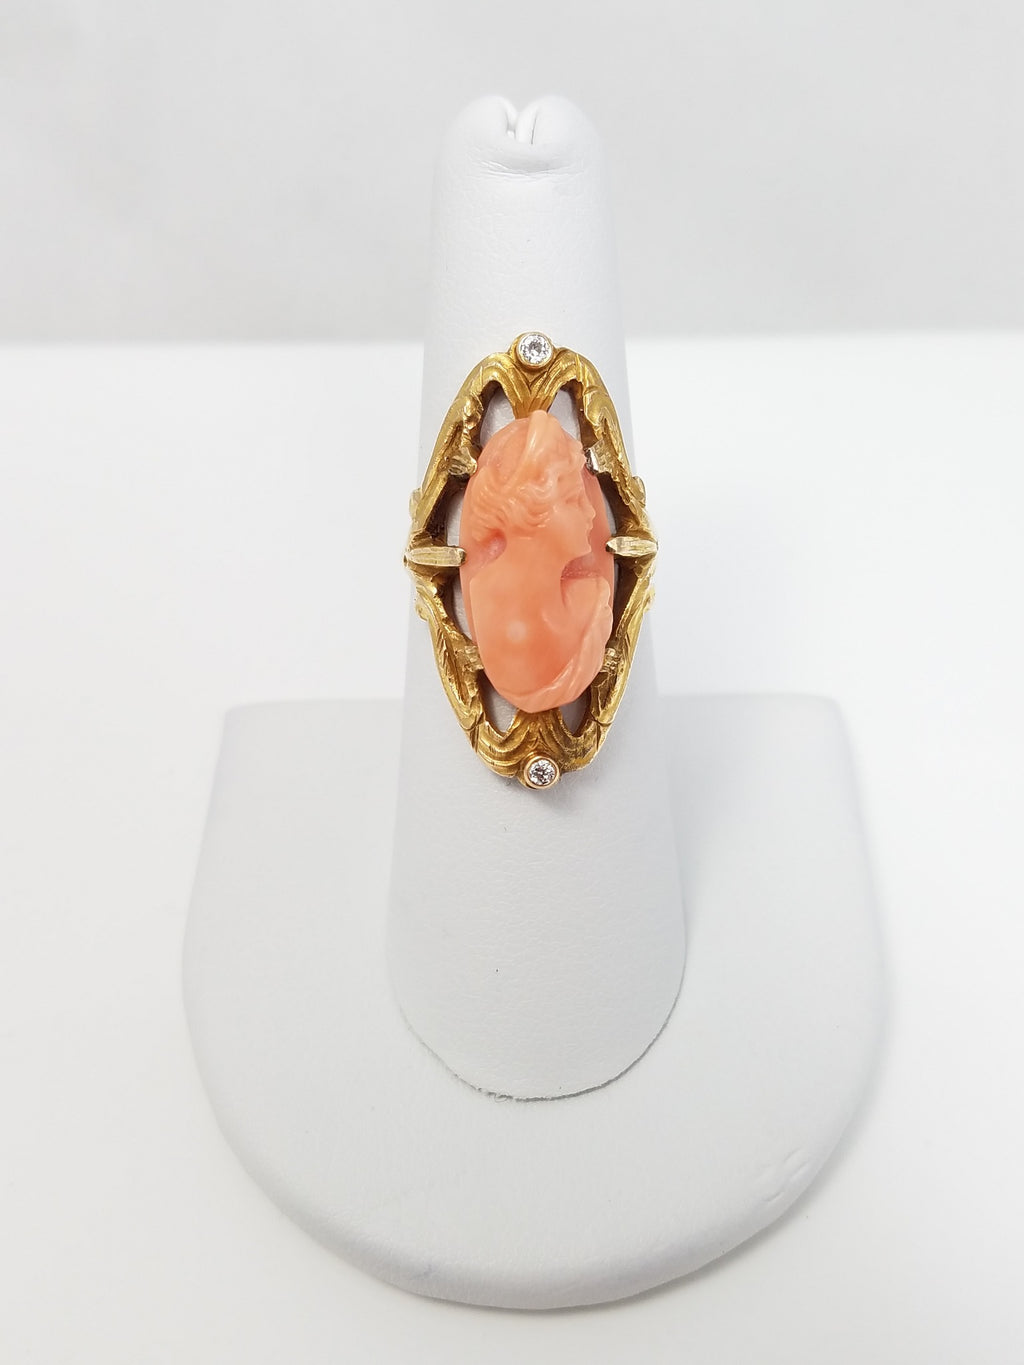 Vintage Art Nouveau 14k Gold Coral Cameo Diamond Ring